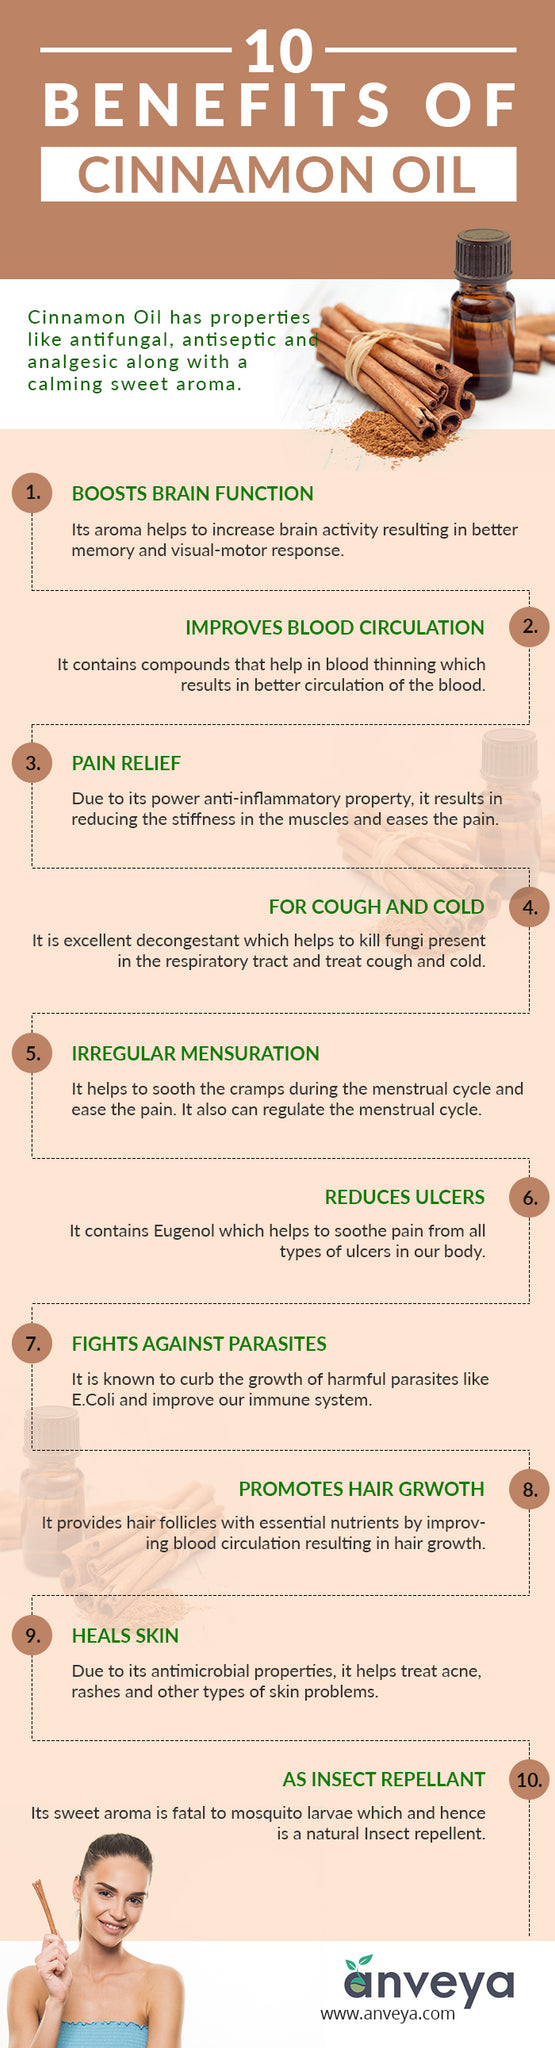 10 Benefits of Cinnamon Oil (Infographic)